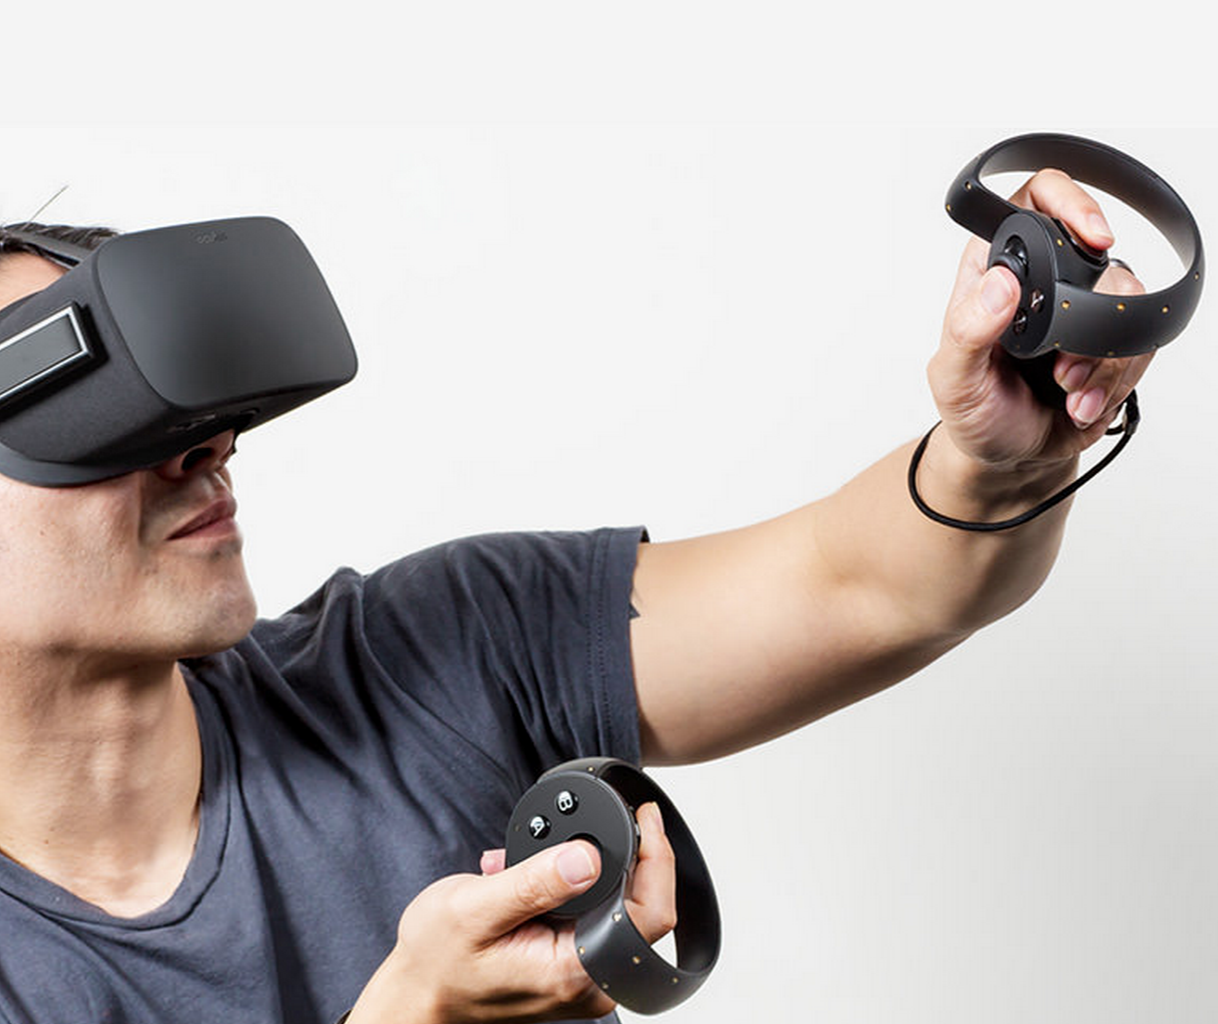 Things vr. Очки виртуальной реальности Oculus Rift. VR шлем Oculus. VR Oculus Rift 2. ВР очки Окулус.